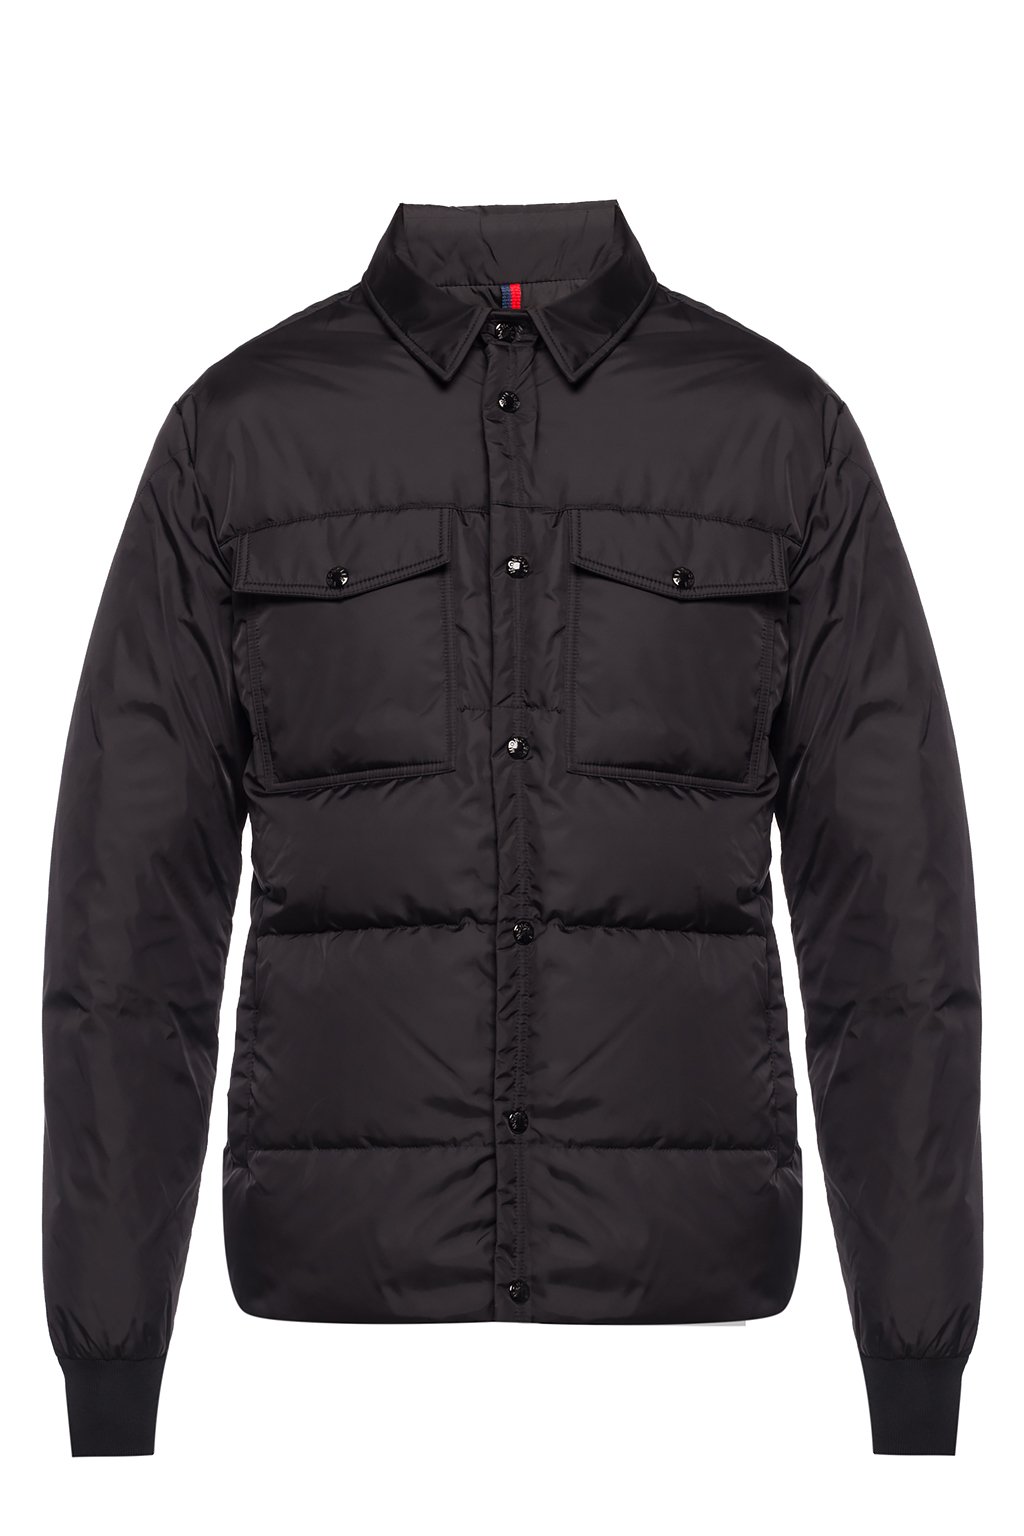 Moncler 'Gruss' appliqued down jacket | Men's Clothing | Vitkac